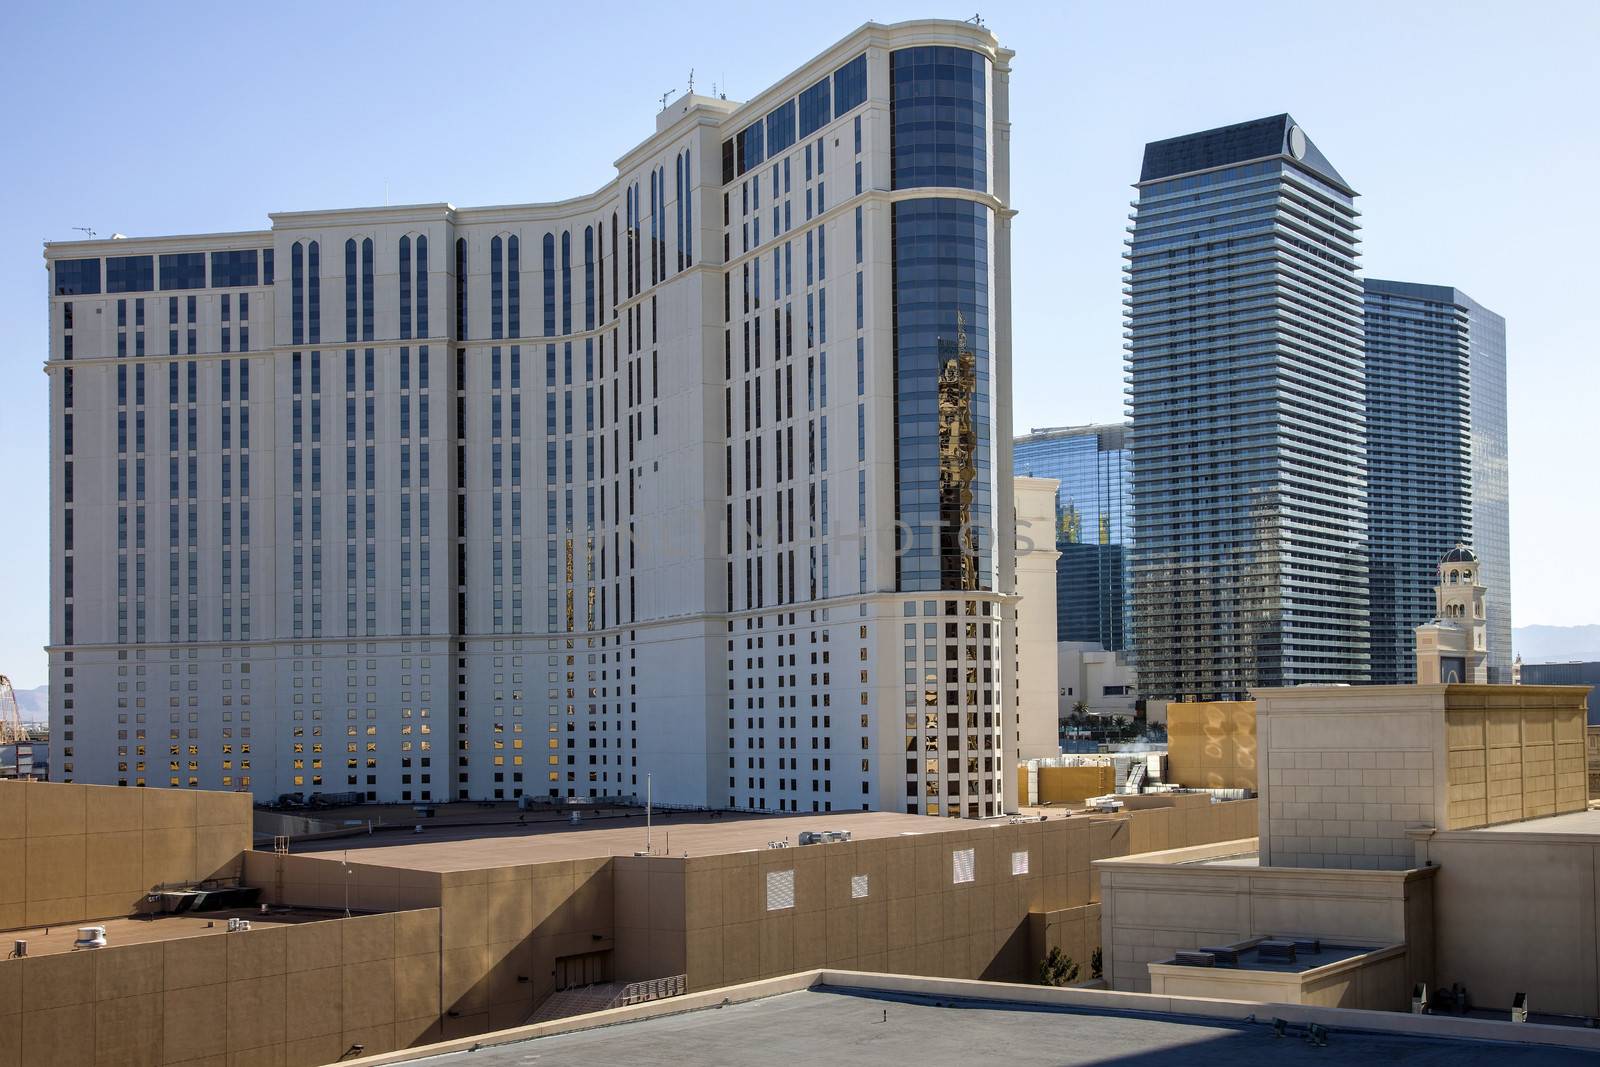 Las Vegas Casino skyscrapers architecture and rootops.